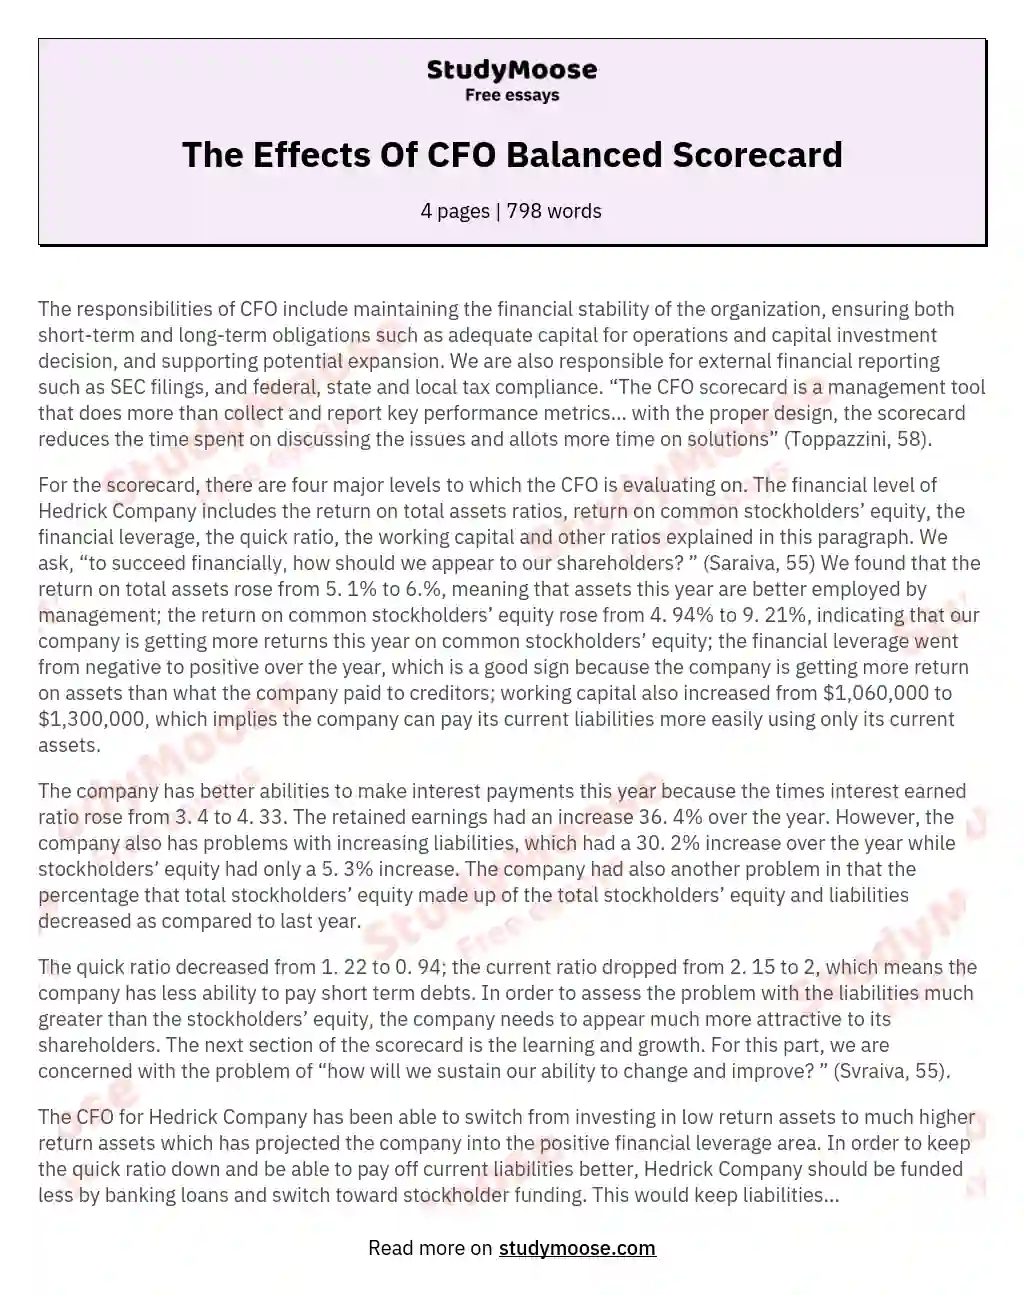 The Effects Of CFO Balanced Scorecard